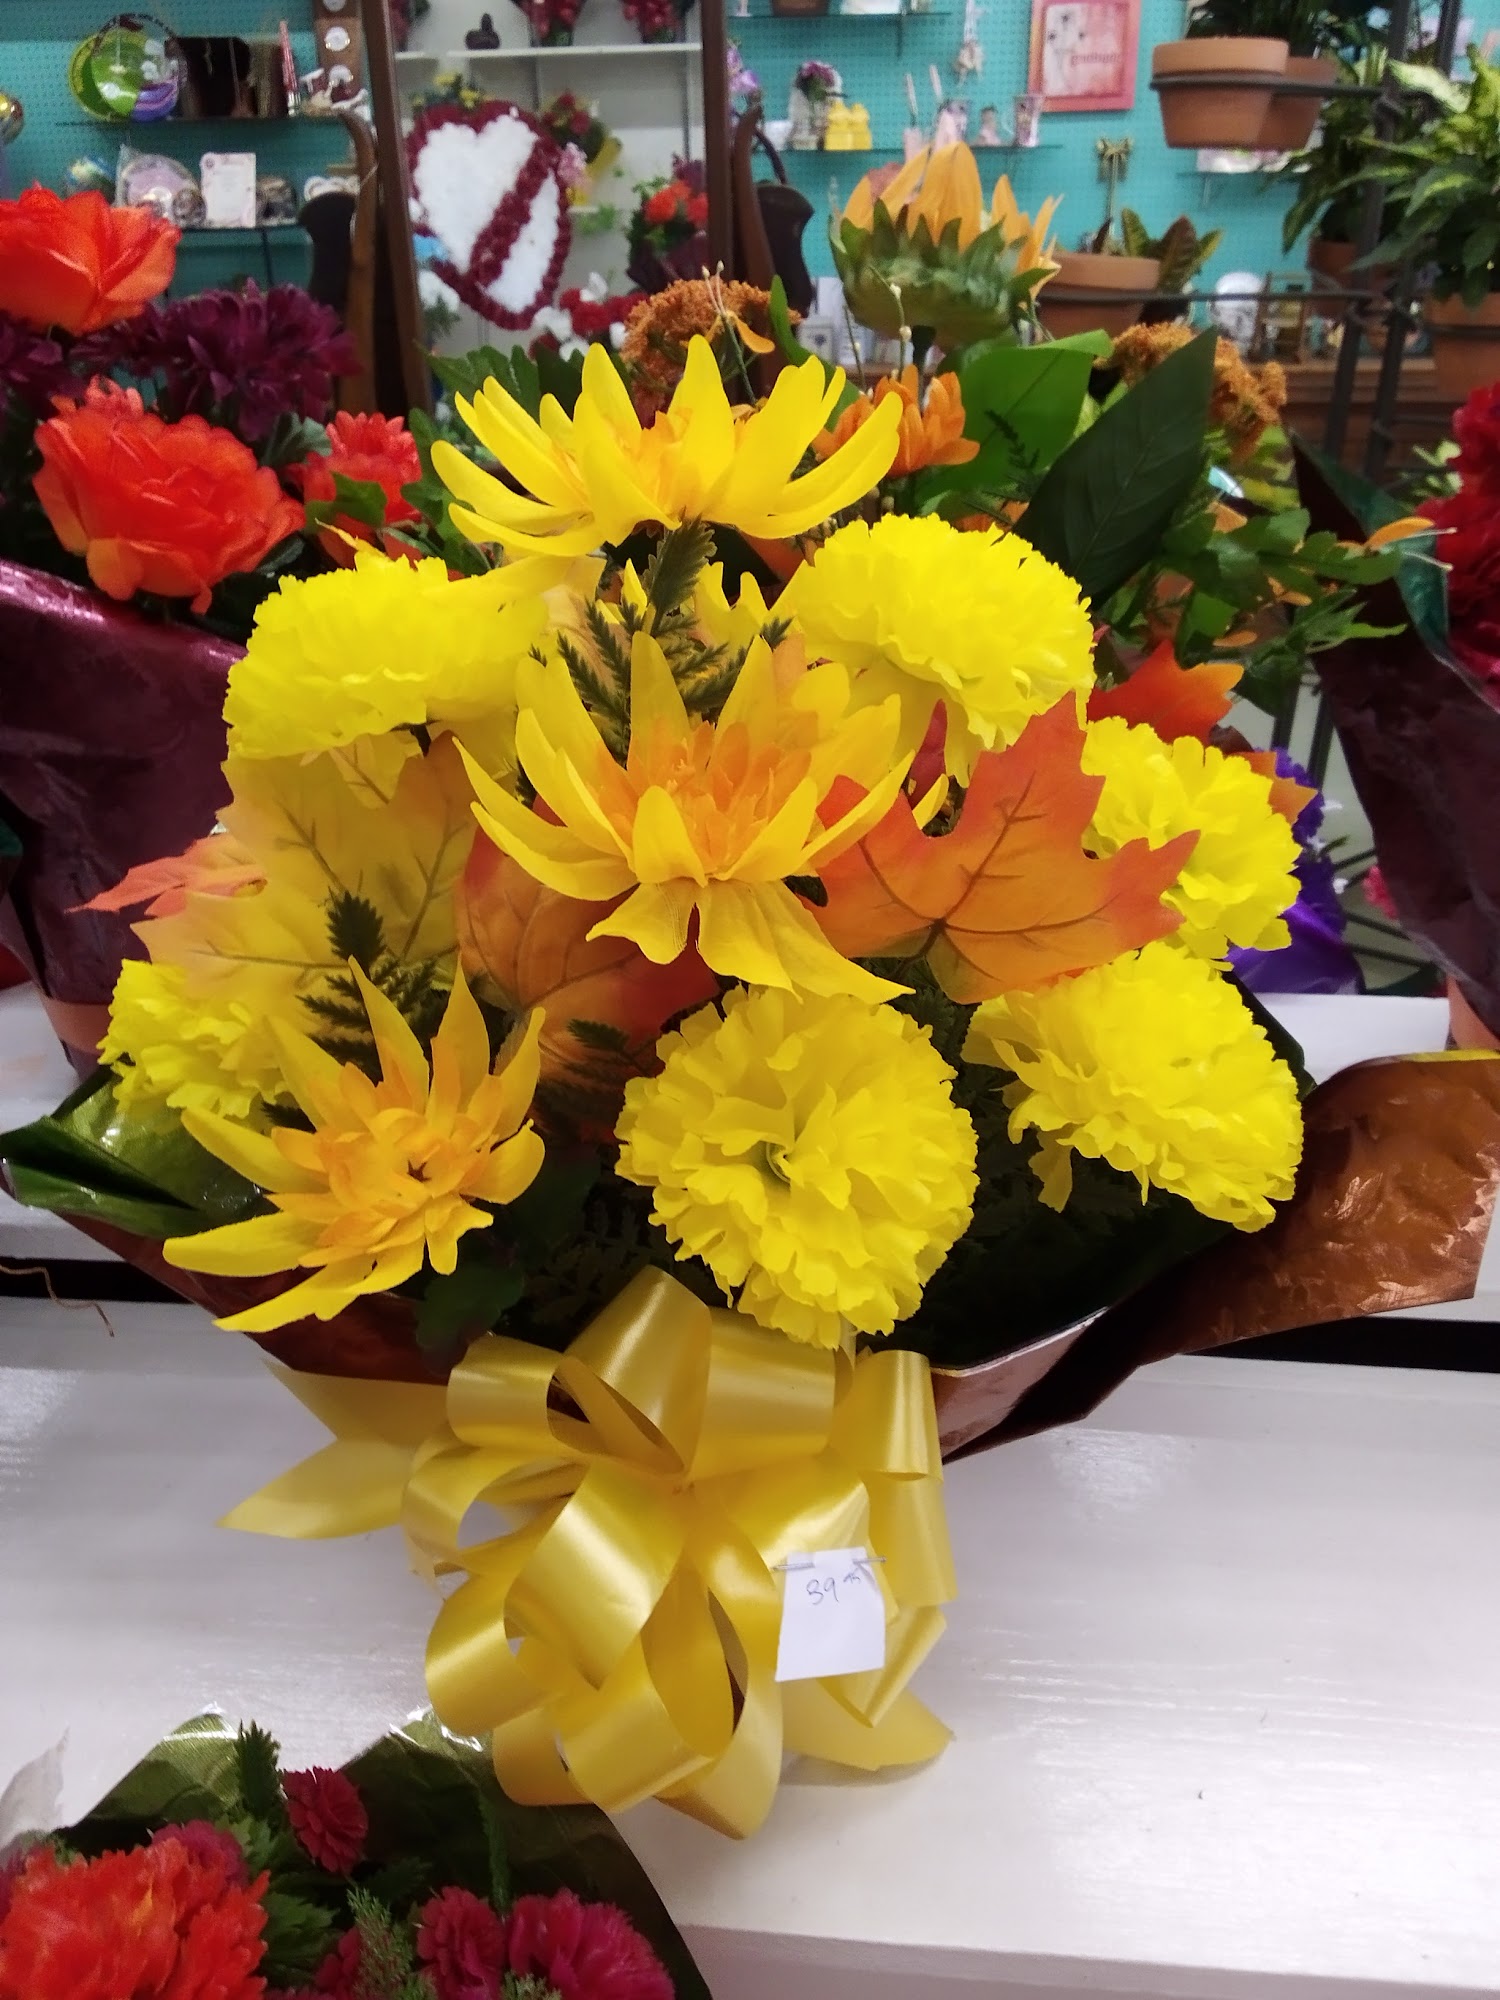 Graham's Flowers & Gifts 208 E Main St, Union South Carolina 29379